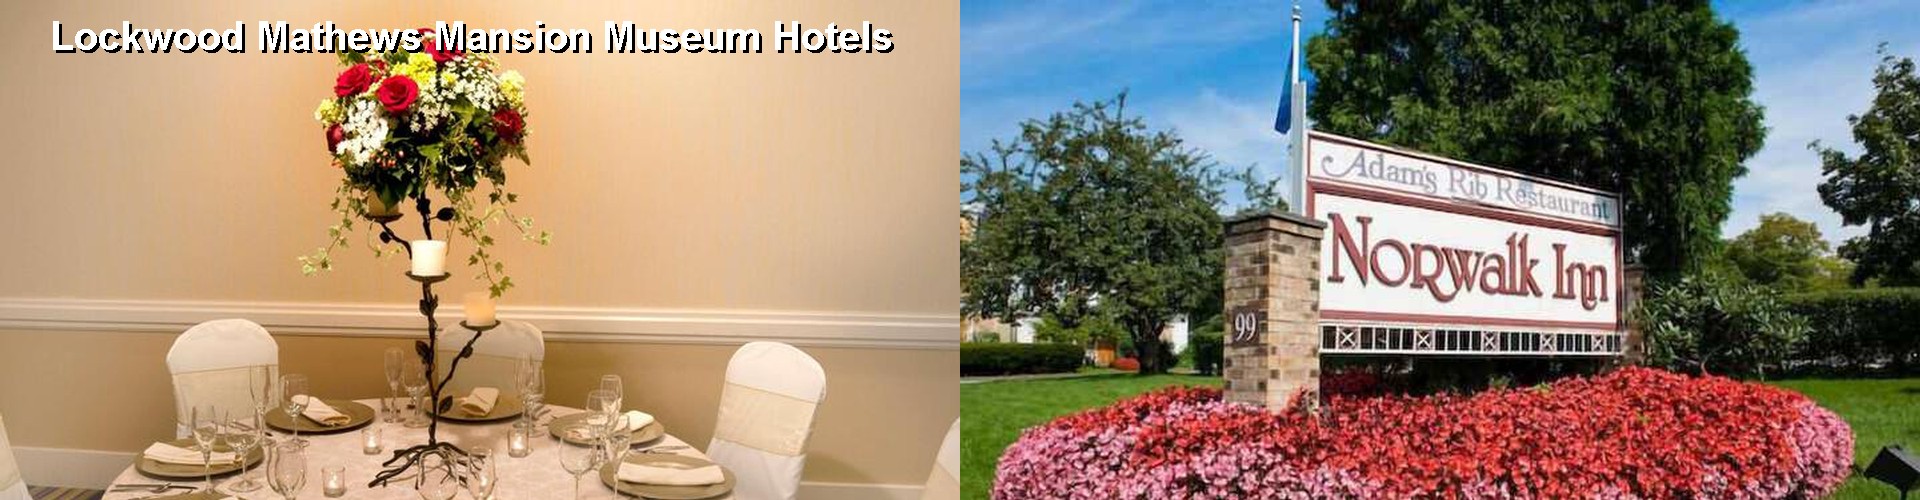 5 Best Hotels near Lockwood Mathews Mansion Museum